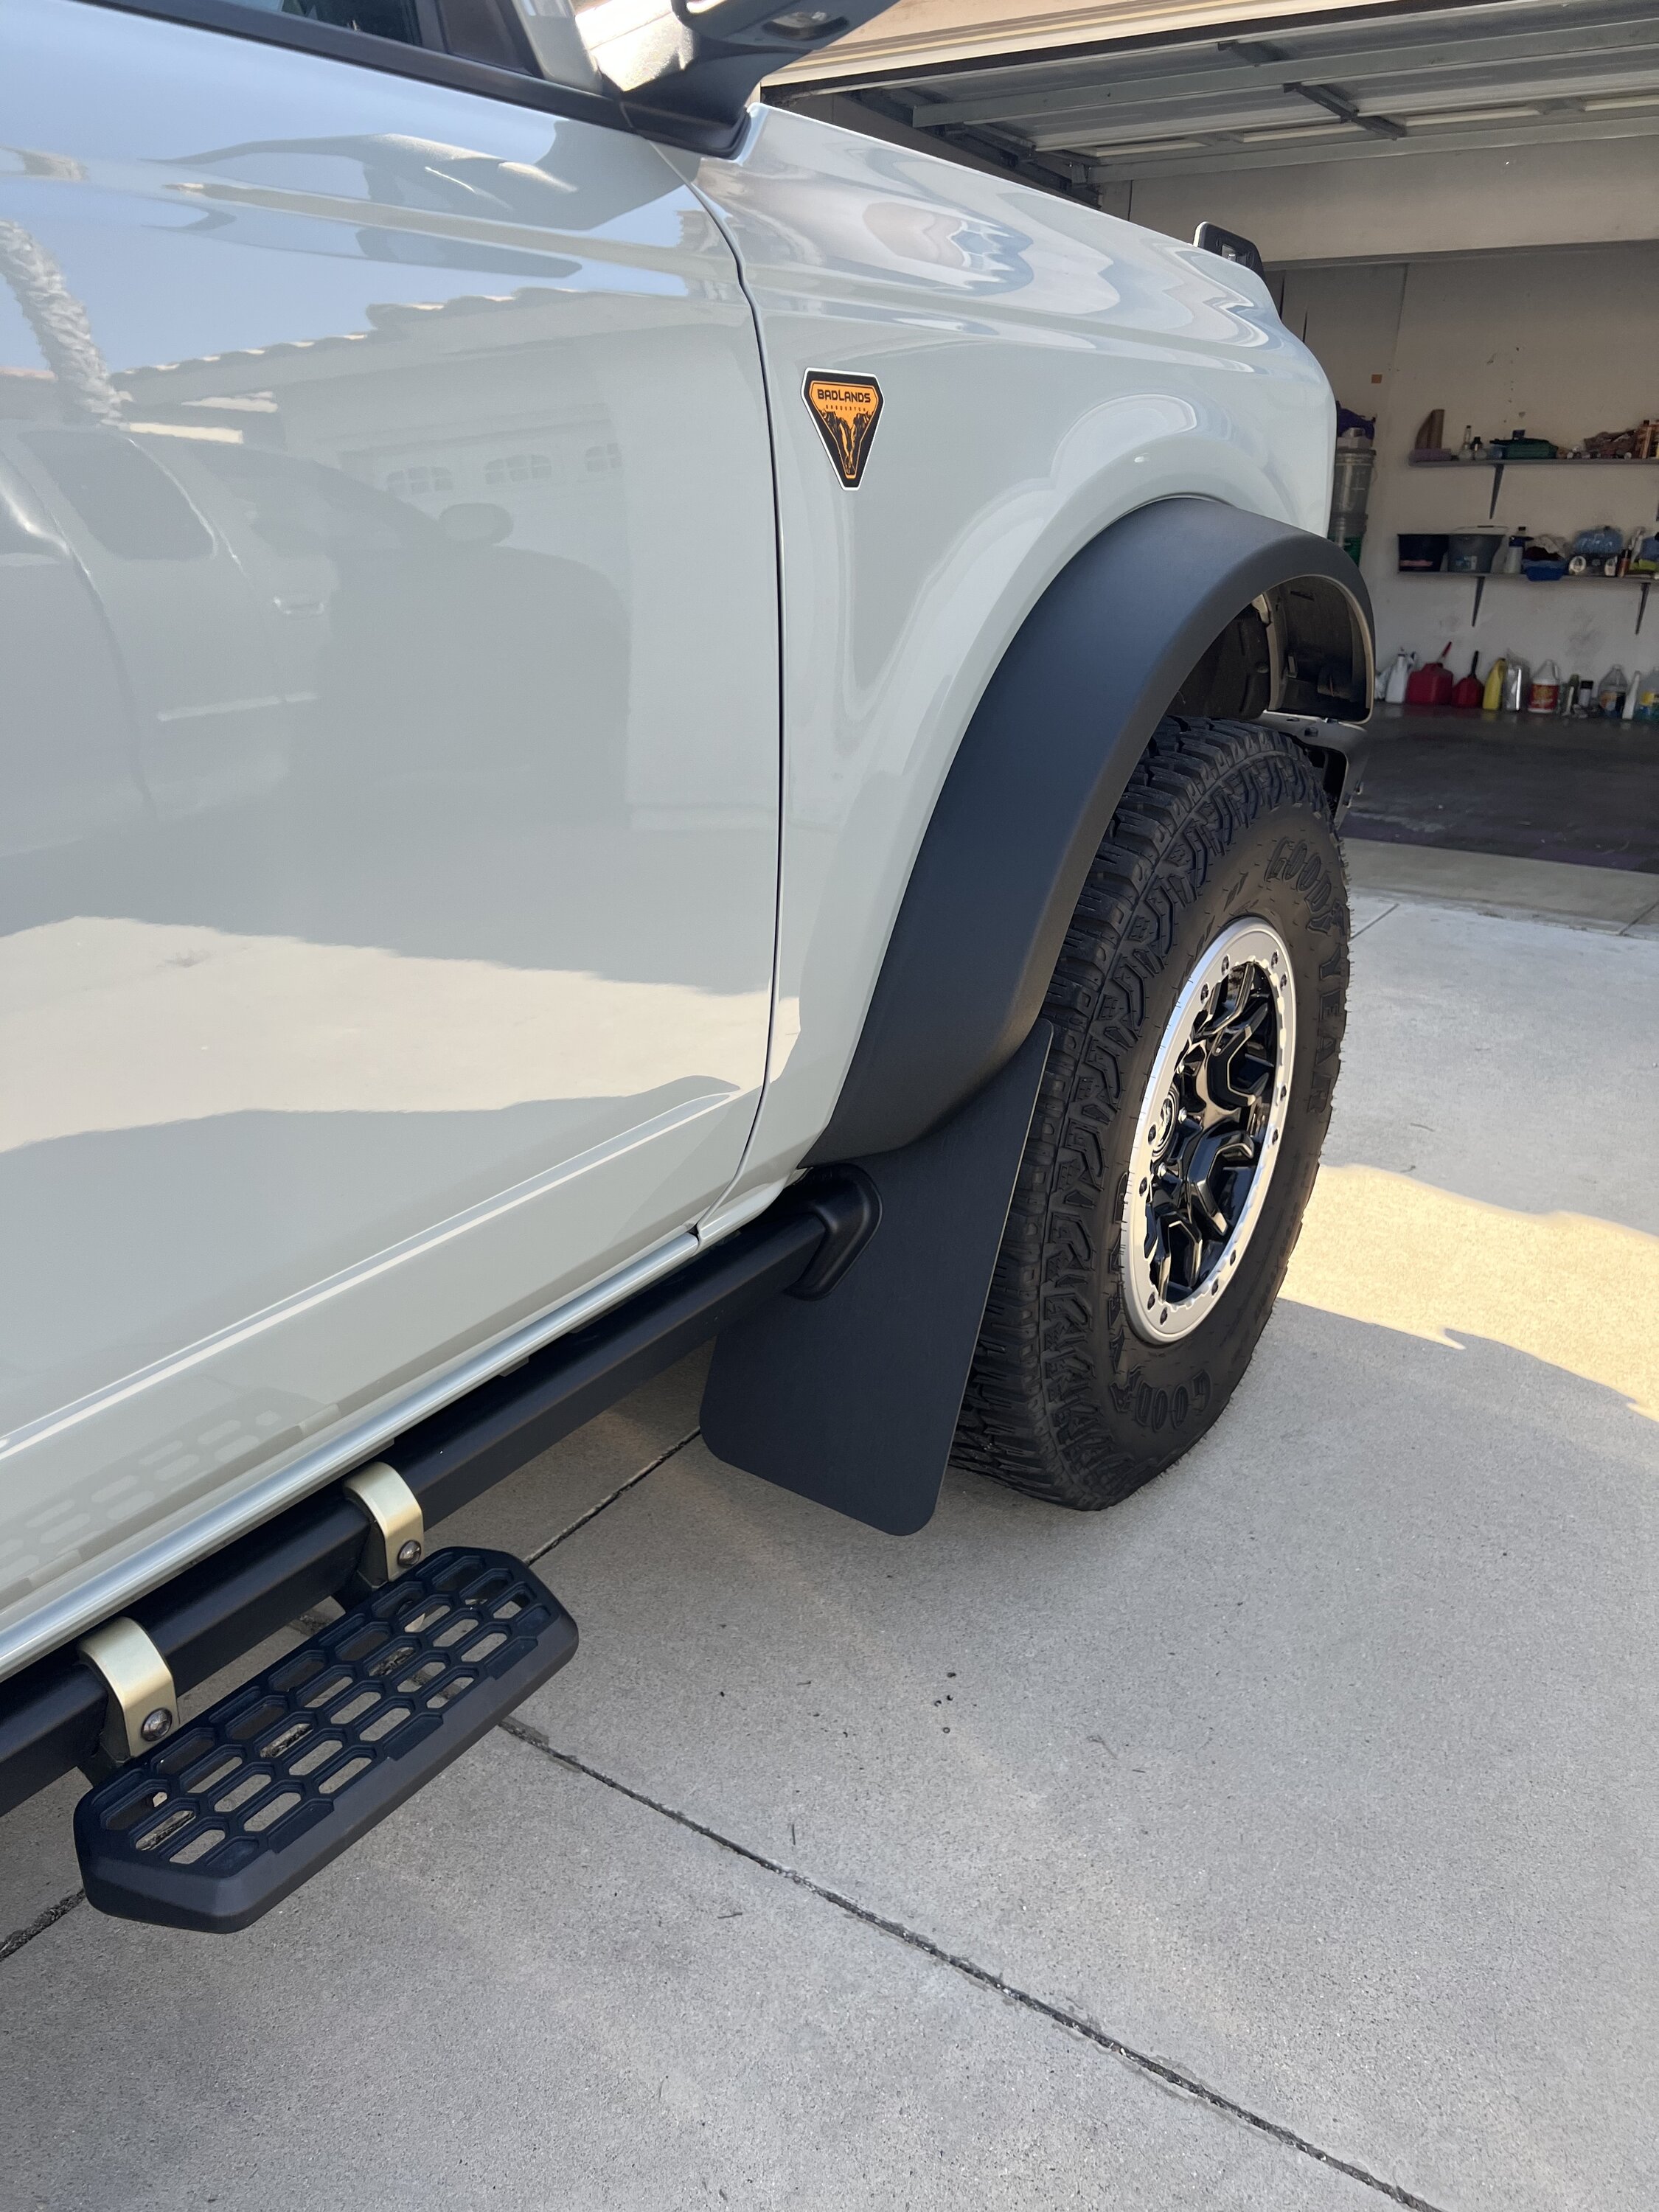 Ford Bronco BLUMAK3D Mud Flaps Install and Review 5D0EC6A7-B5DA-4A6D-ABA6-A15B2A2FFF04